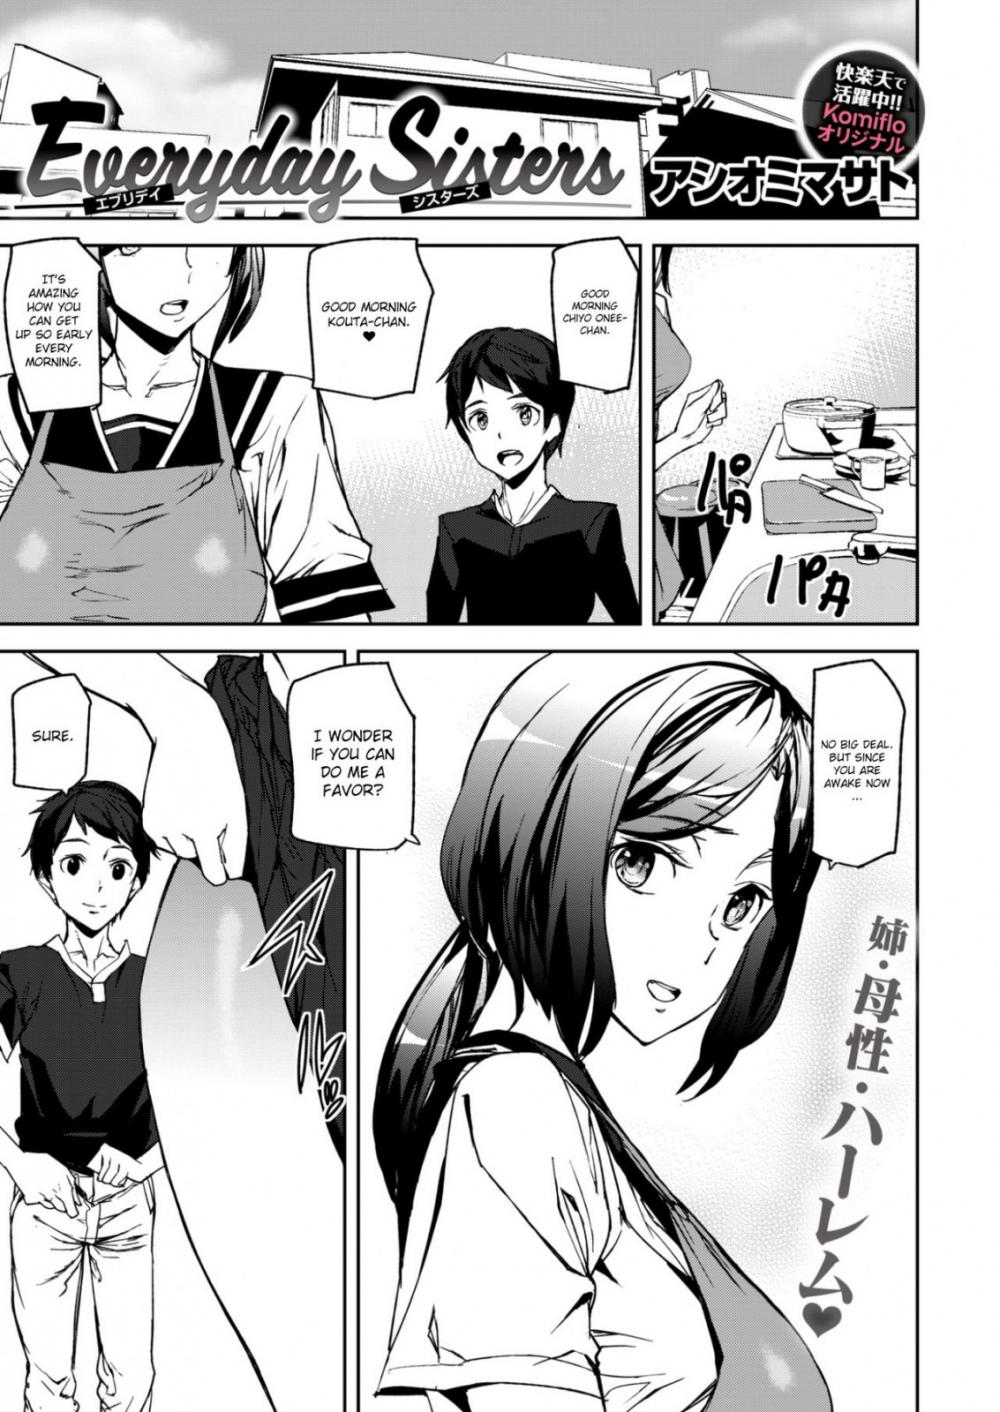 Hentai Manga Comic-Everyday Sisters-Read-1